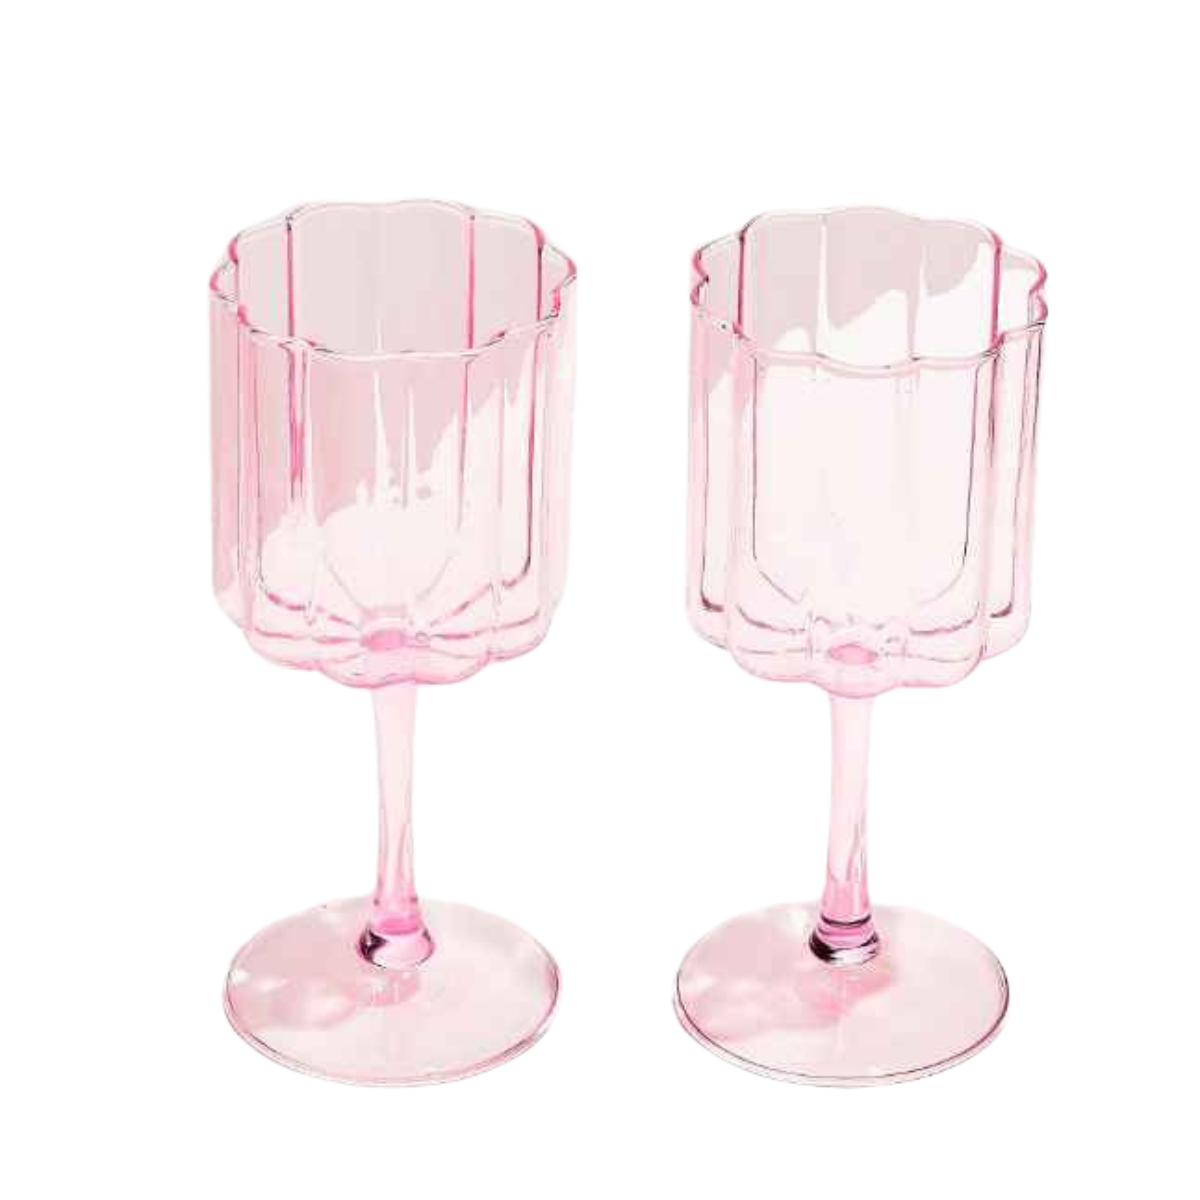 Scalloped Wine Set Glasses - (3 colors)